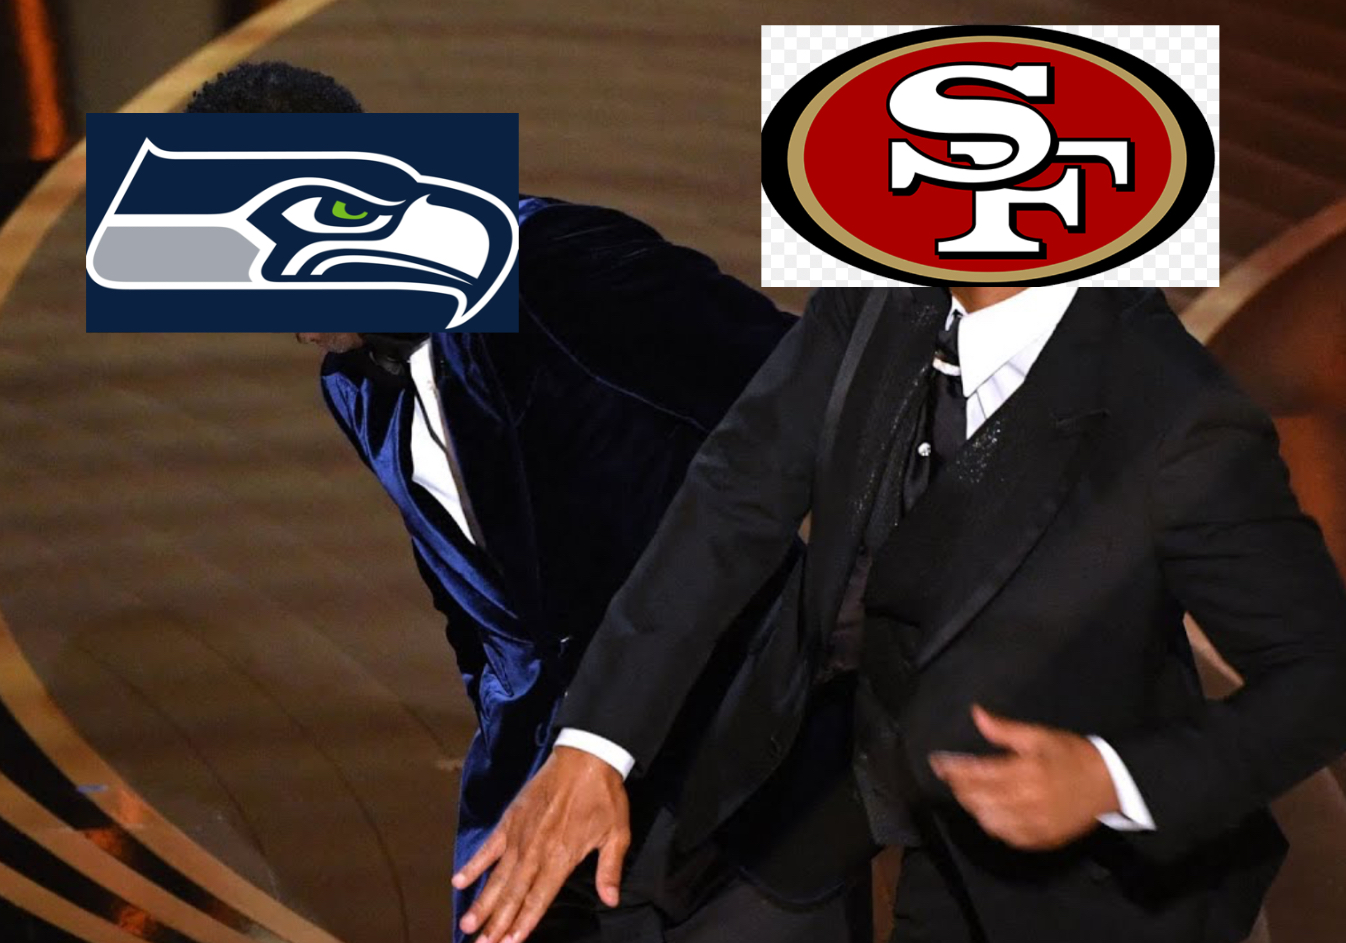 seahawks meme vs 49ers